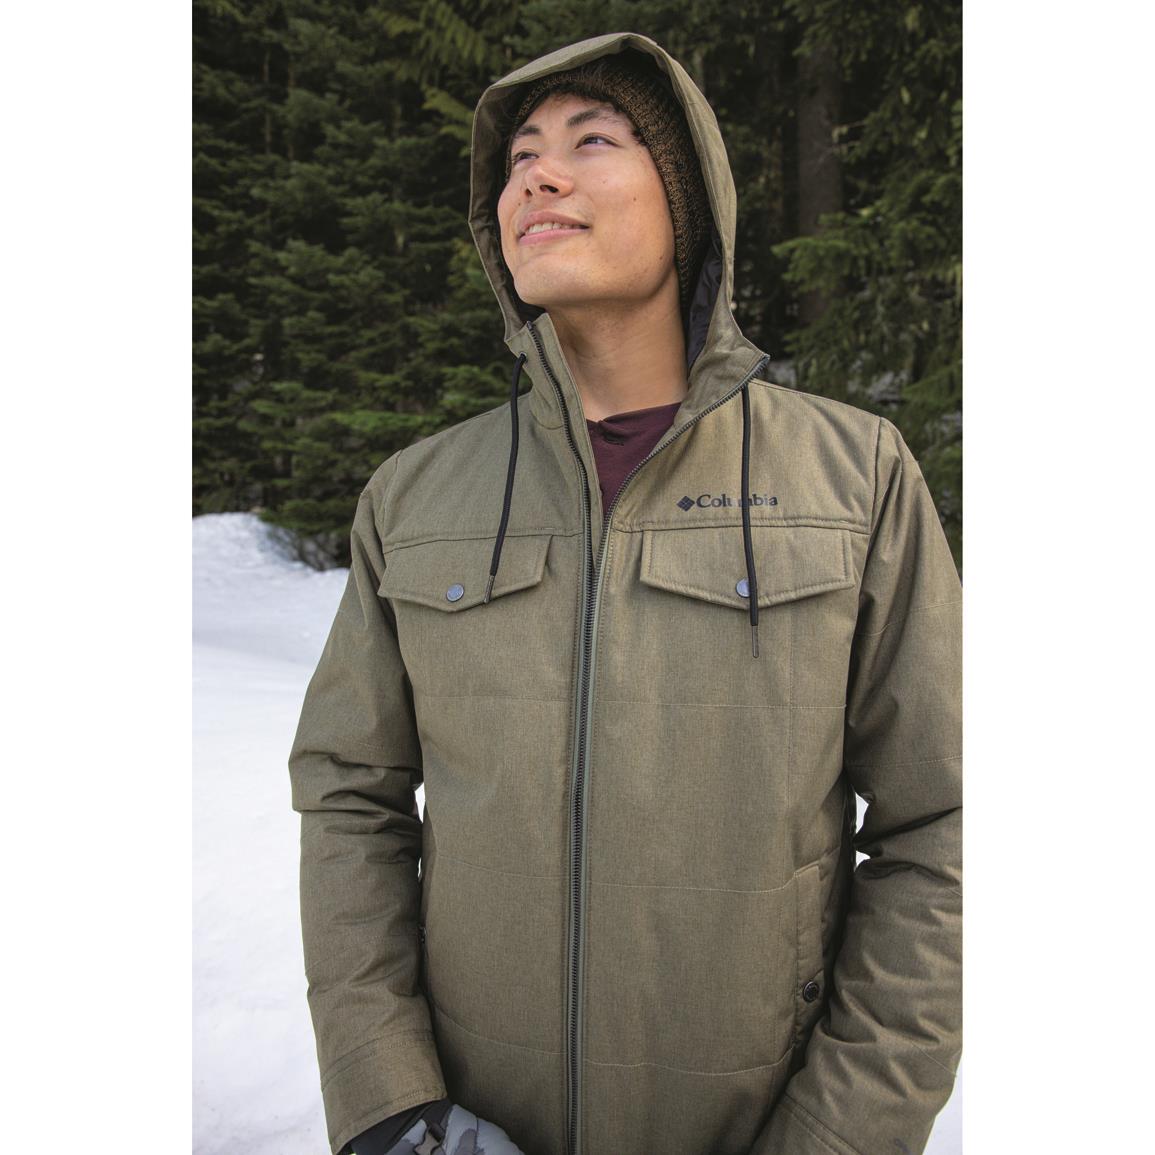 Eskimo Men's Keeper Waterproof Insulated Jacket with Uplyft - 728695,  Jackets, Coats & Rain Gear at Sportsman's Guide